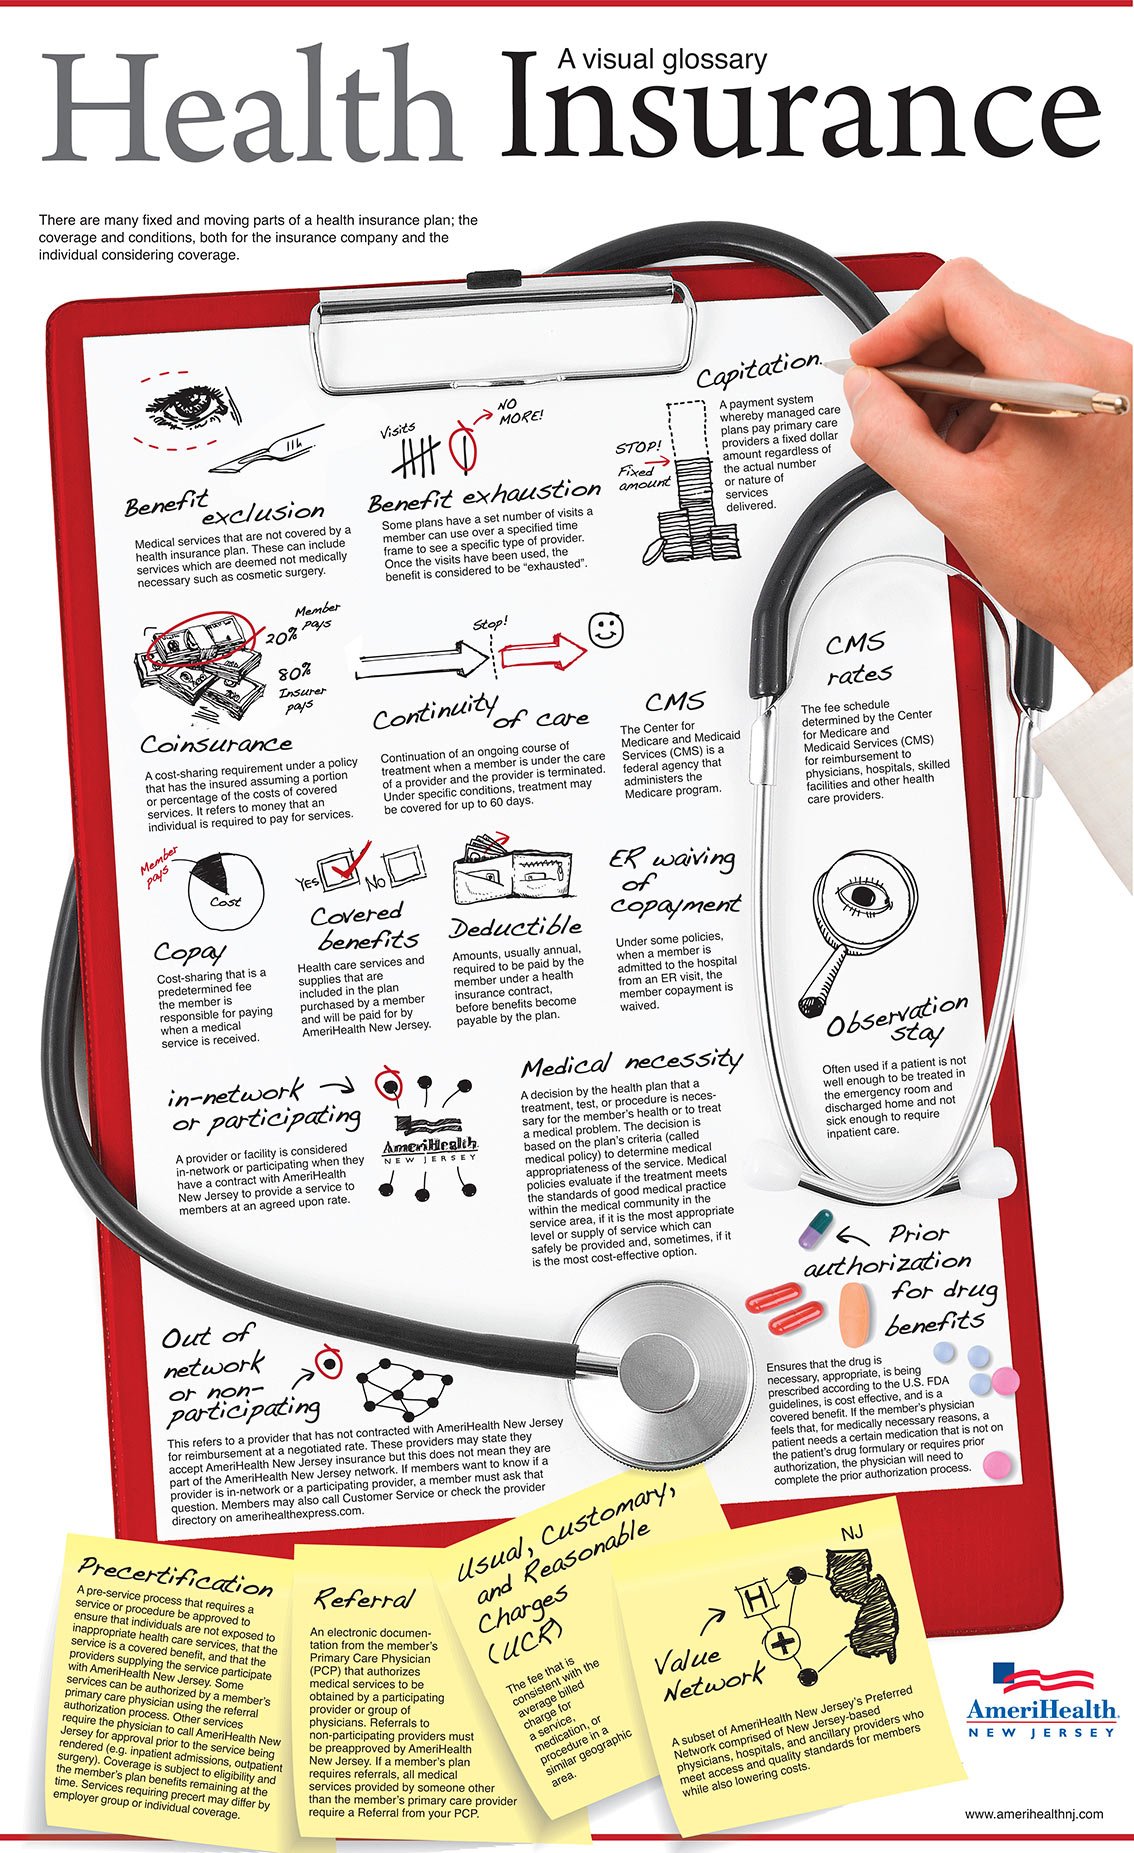 Health Insurance Visual Glossary